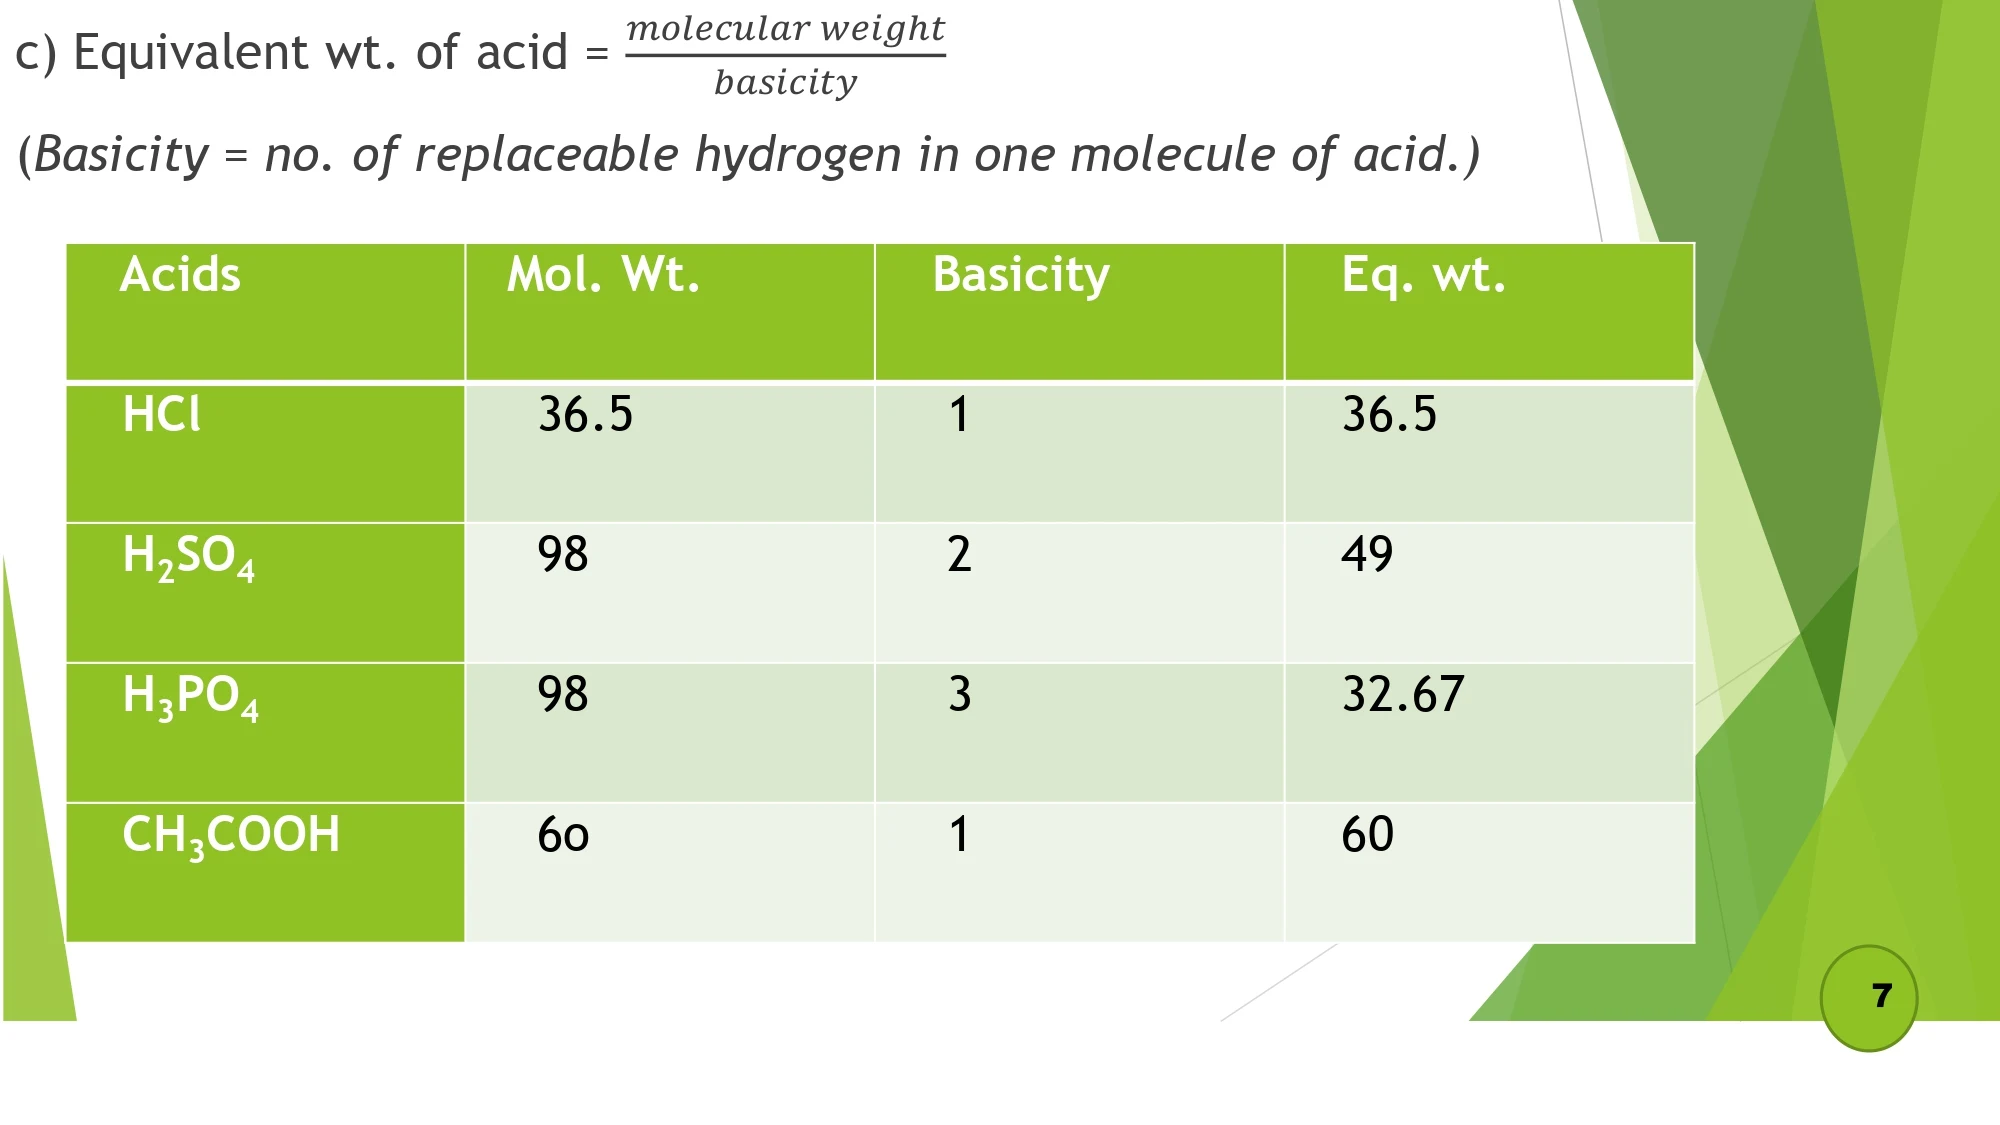 d) Equivalent wt. of acid = molecular weight / basicity